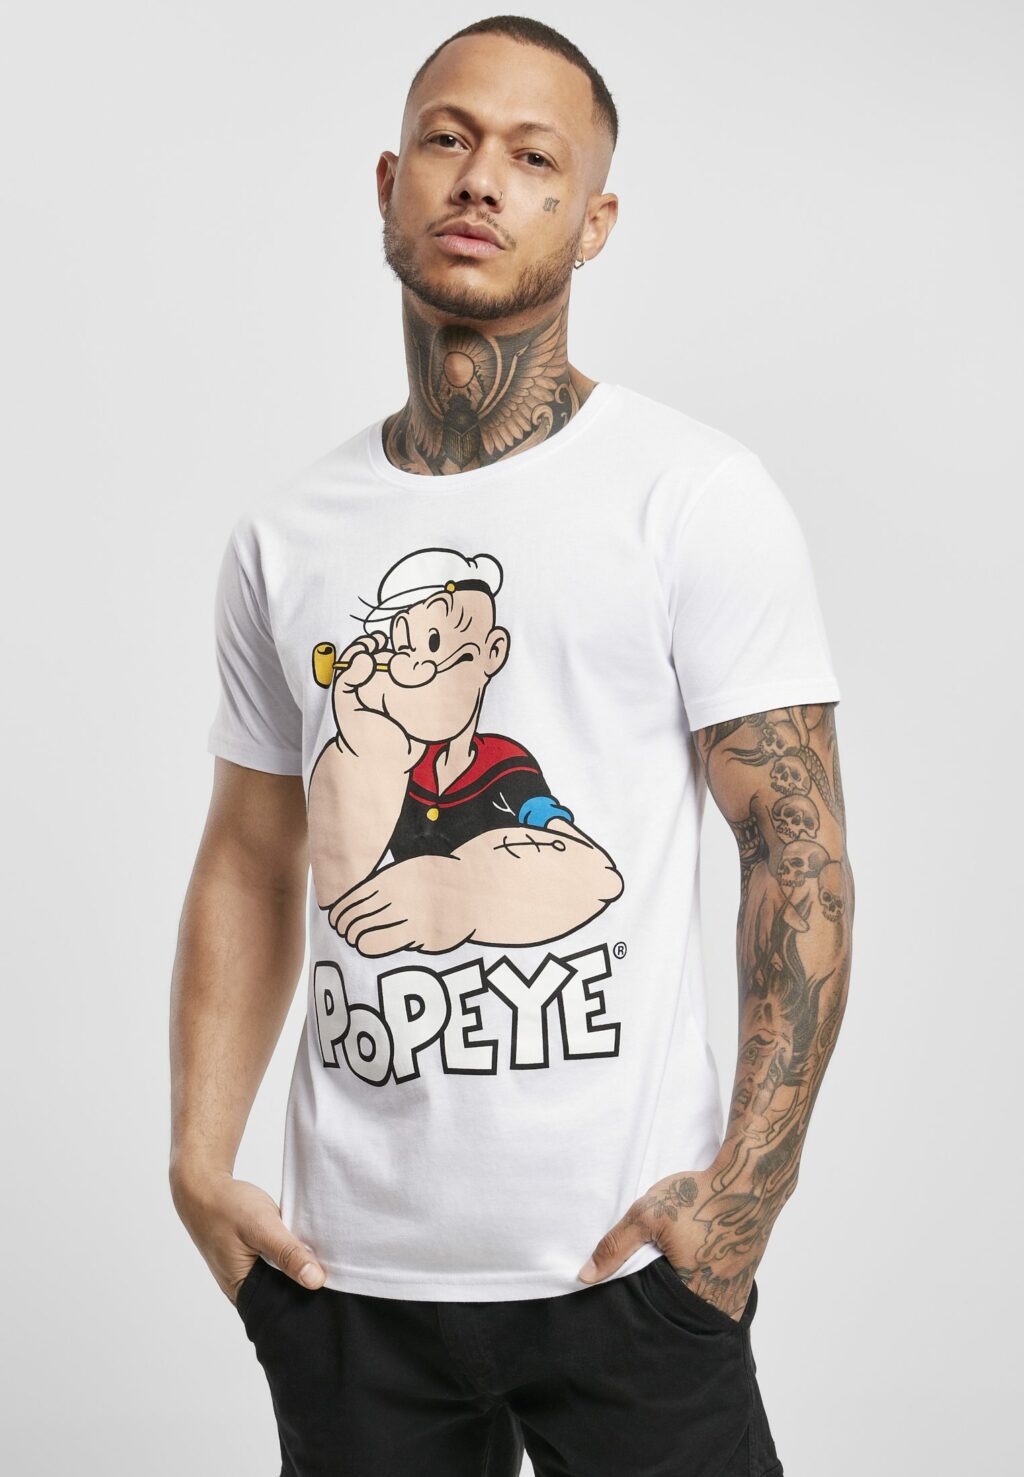 Popeye Logo And Pose Tee white MC622